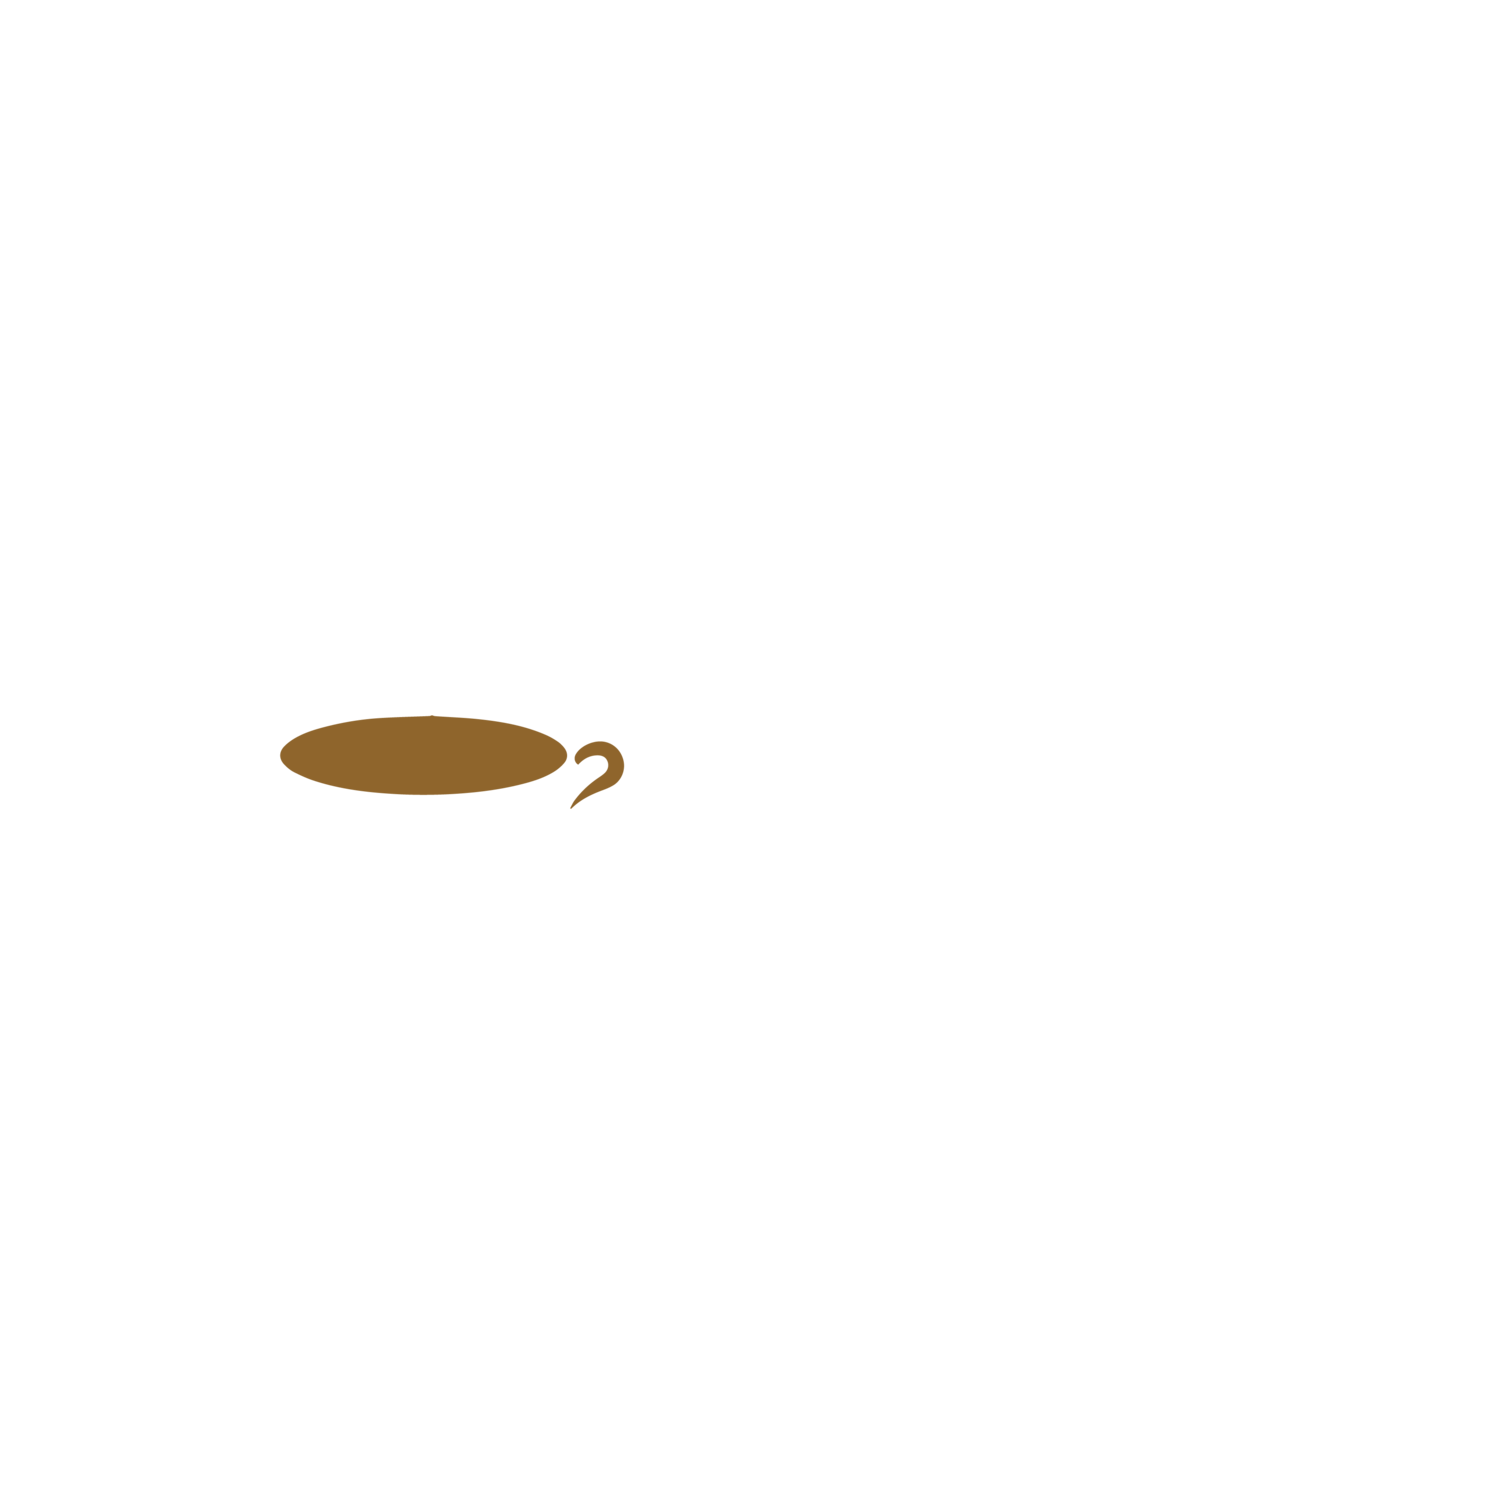 Cura Café